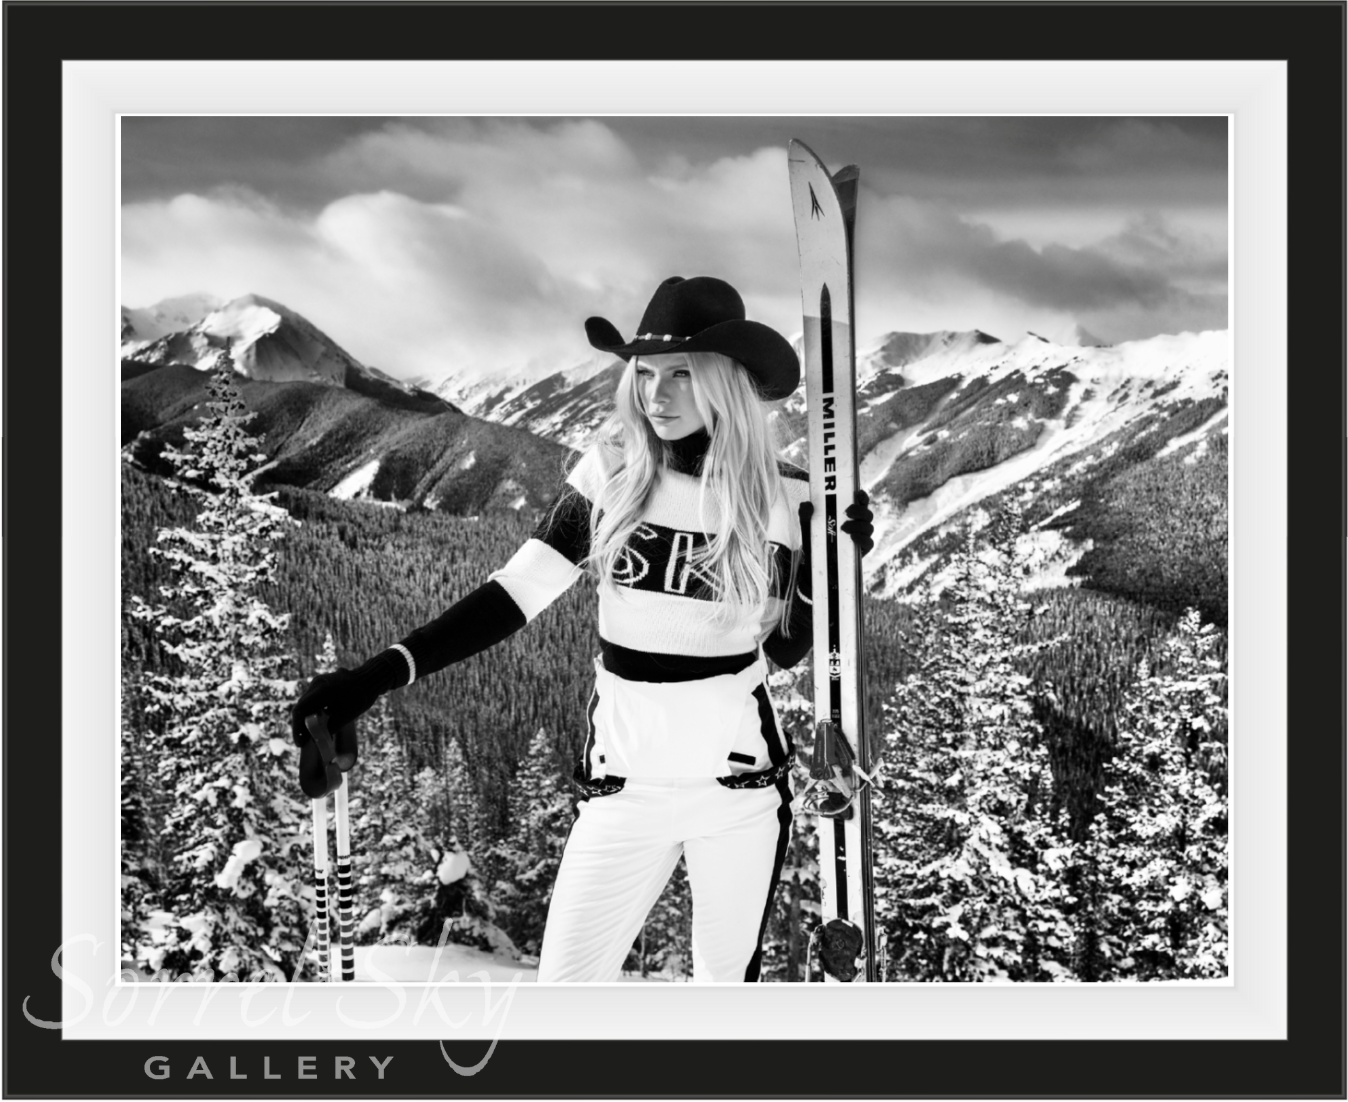 The Rockies-Photographic Print-David Yarrow-Sorrel Sky Gallery